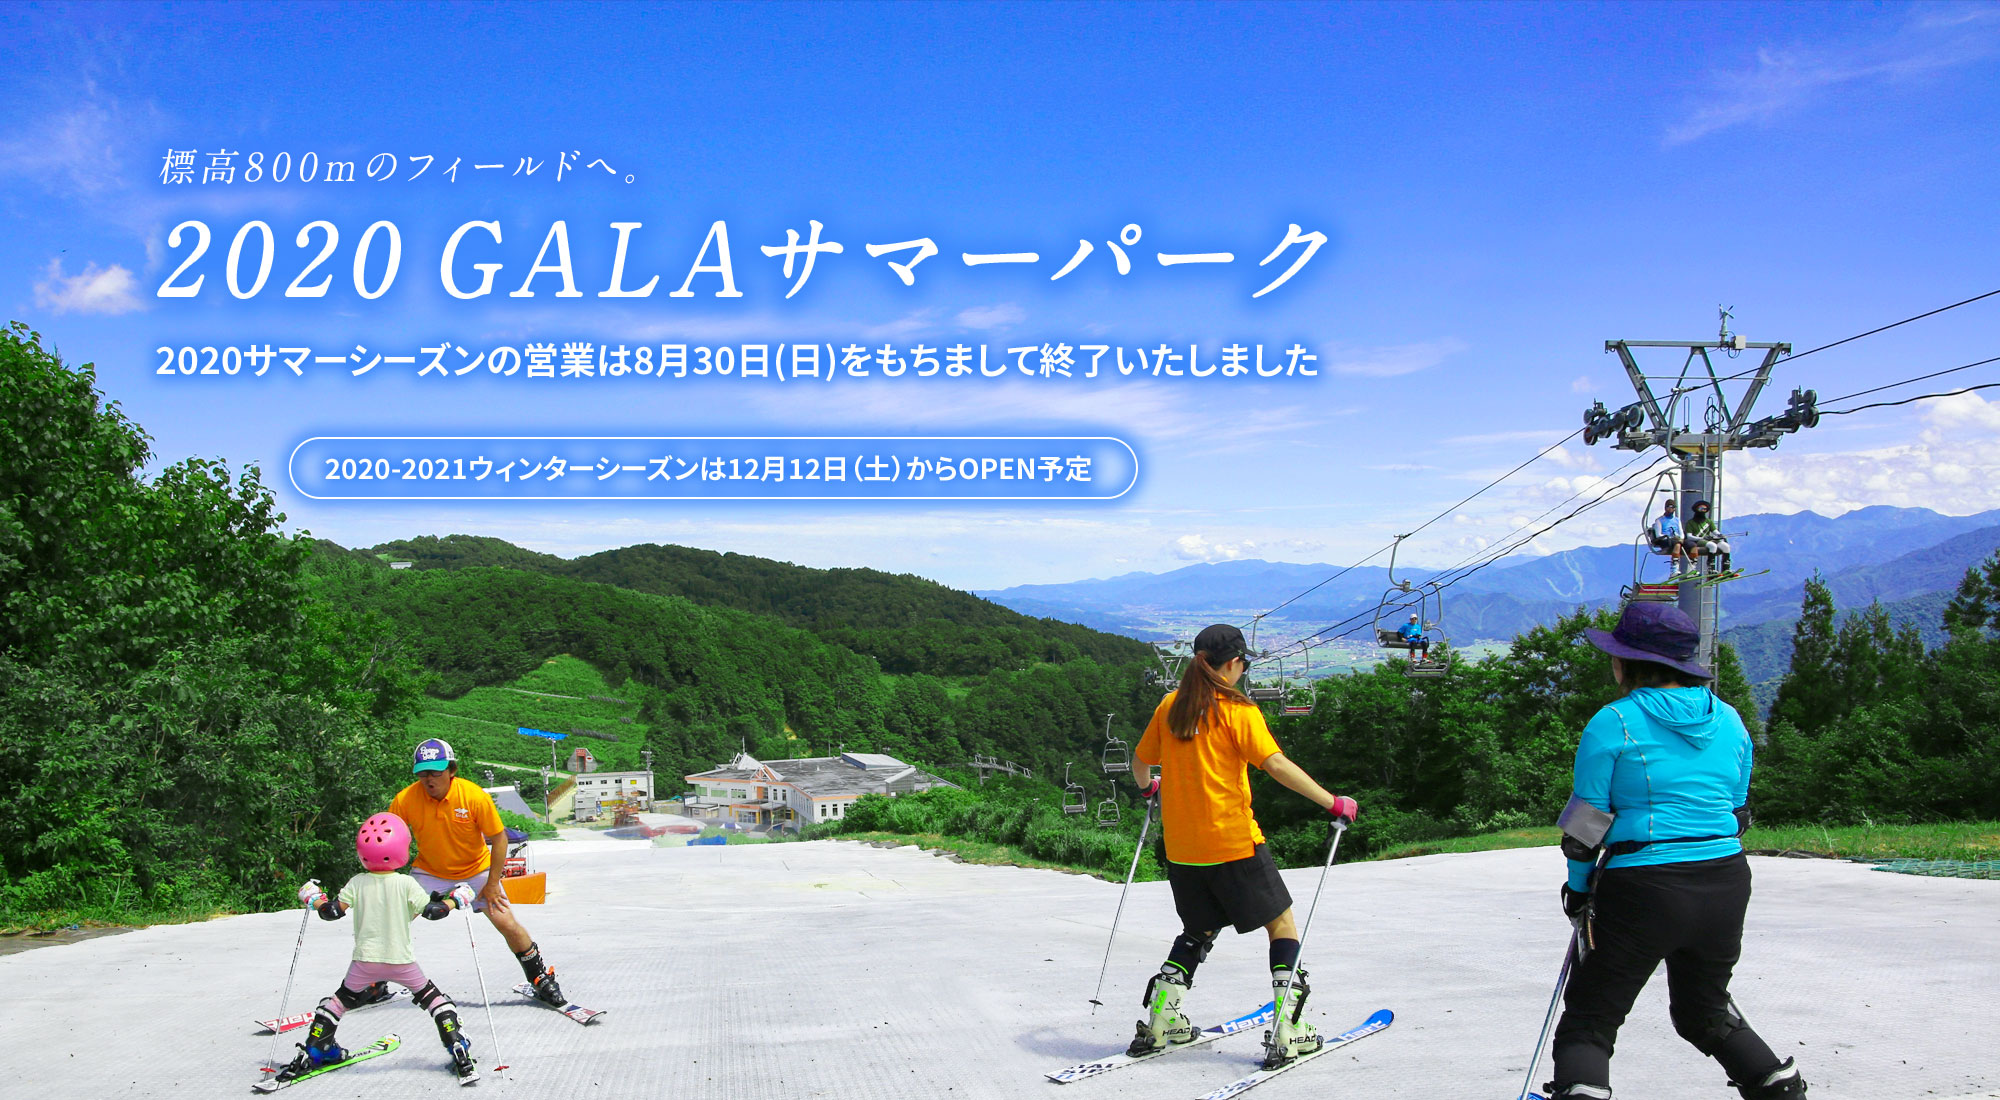 Galaサマーパーク ガーラ湯沢スキー場 新潟県湯沢町